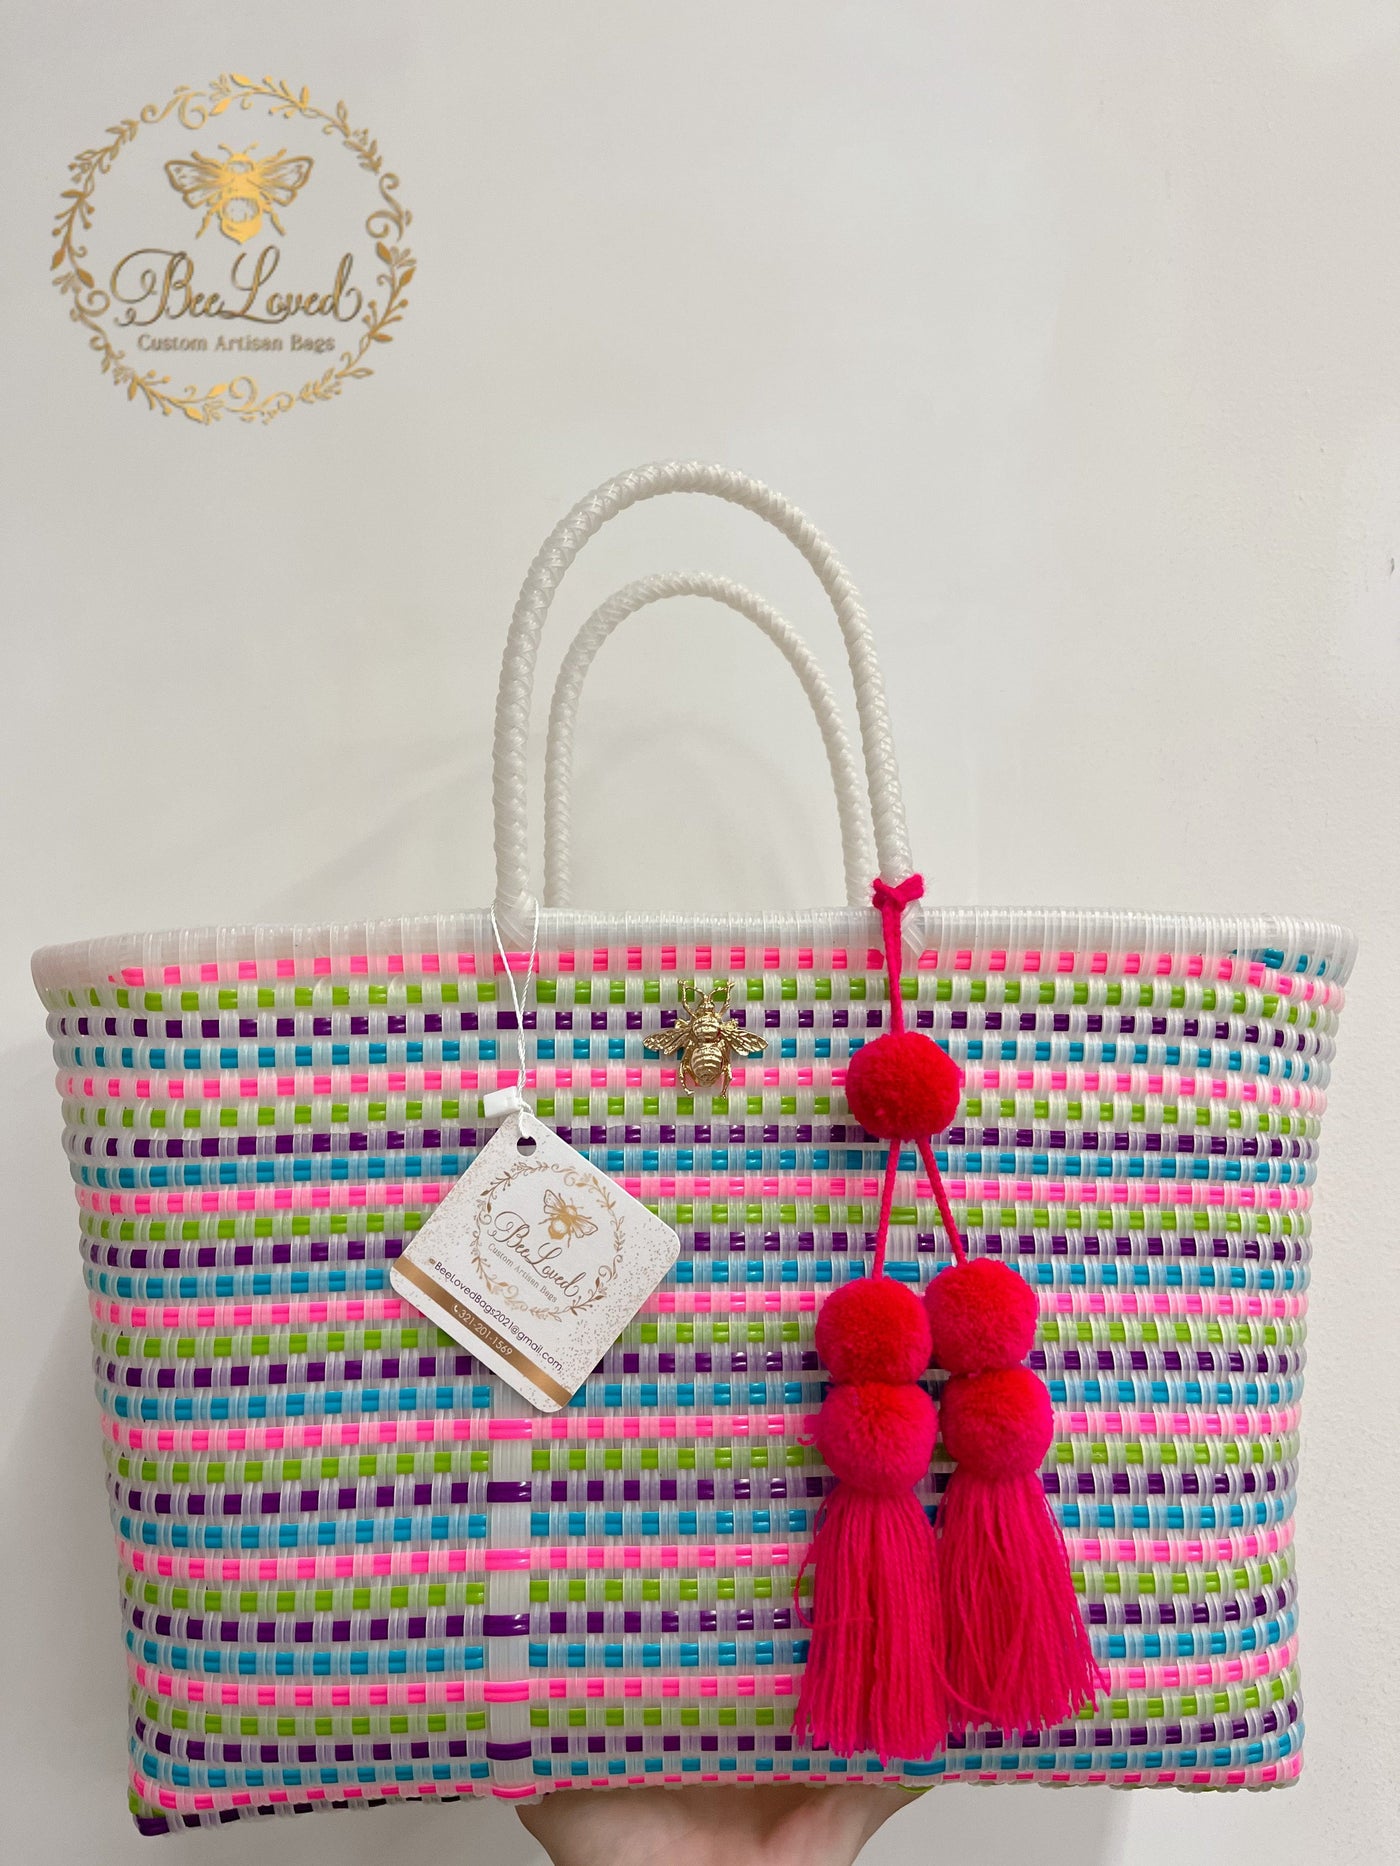 BeeLoved Custom Artisan Bags and Gifts Handbags Small Hayes Beech Bag